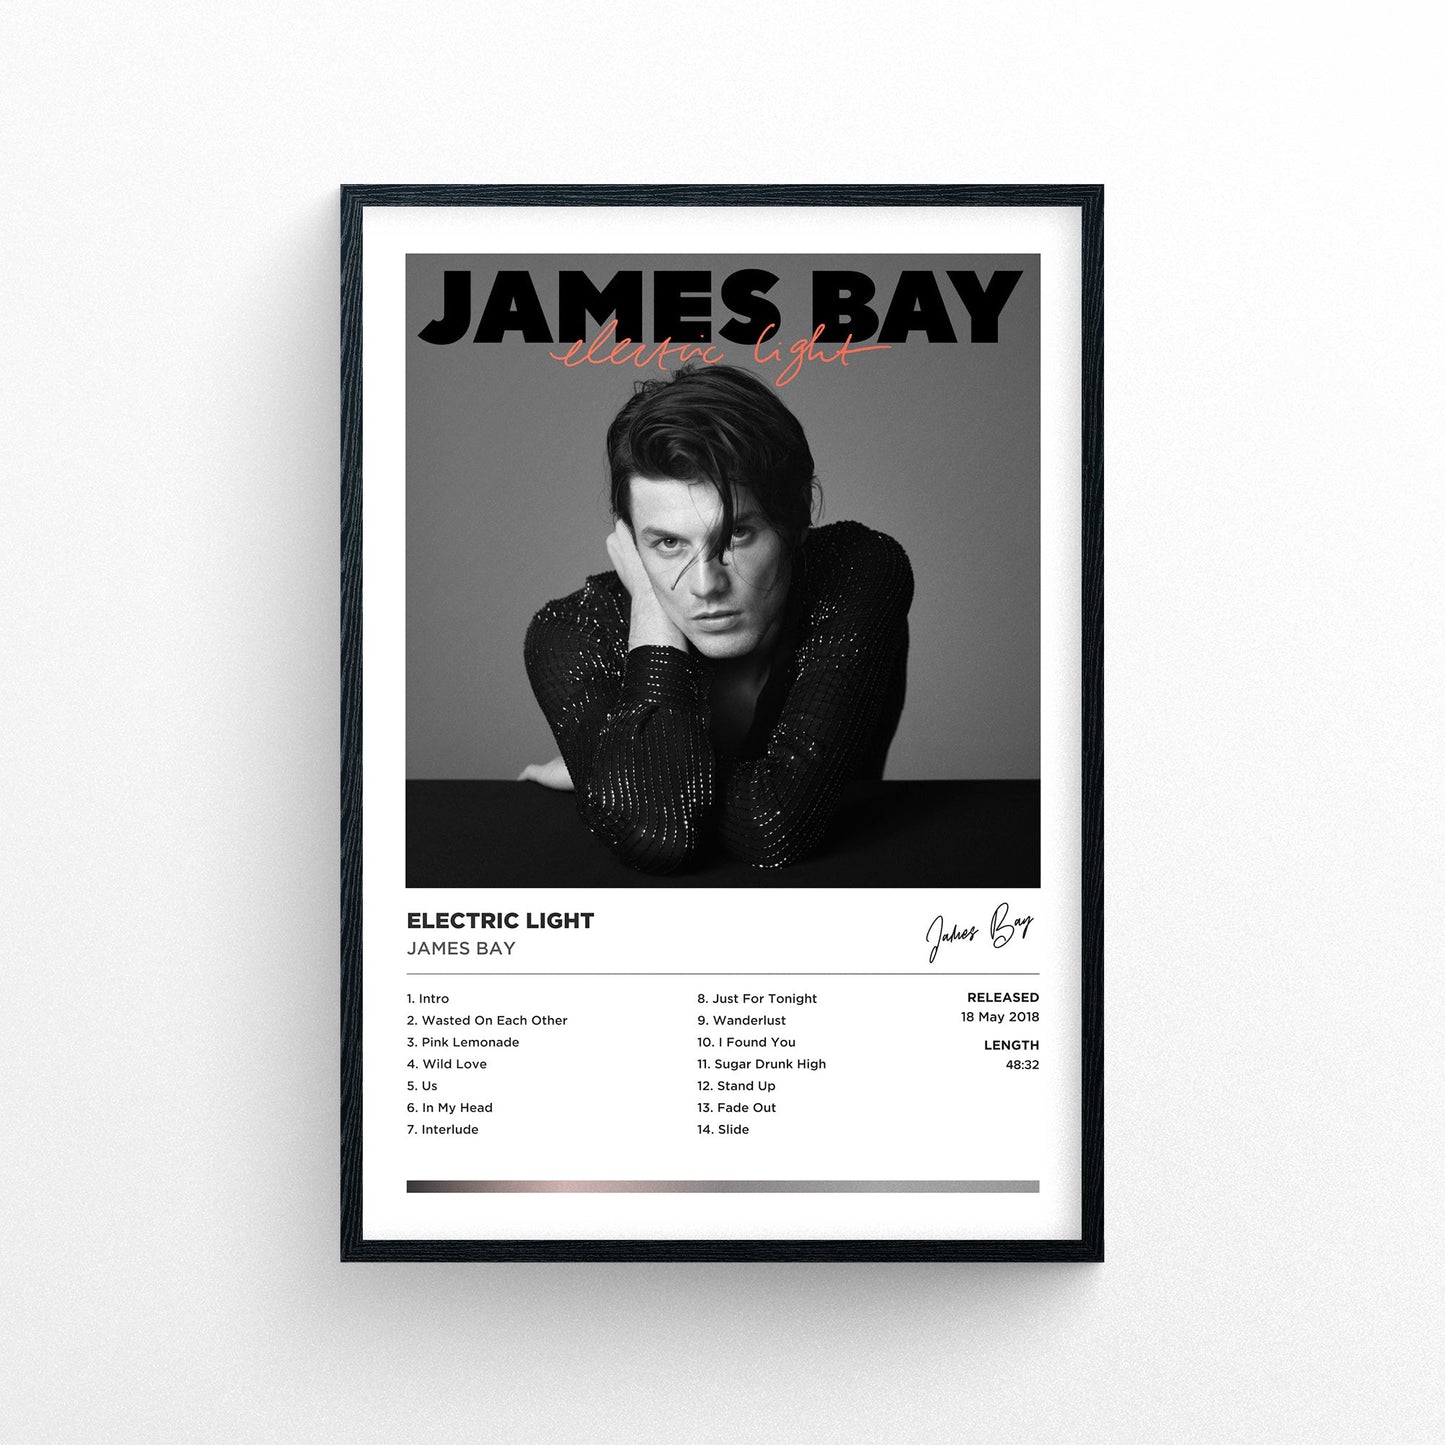 James Bay - Electric Light Framed Poster Print | Polaroid Style | Album Cover Artwork